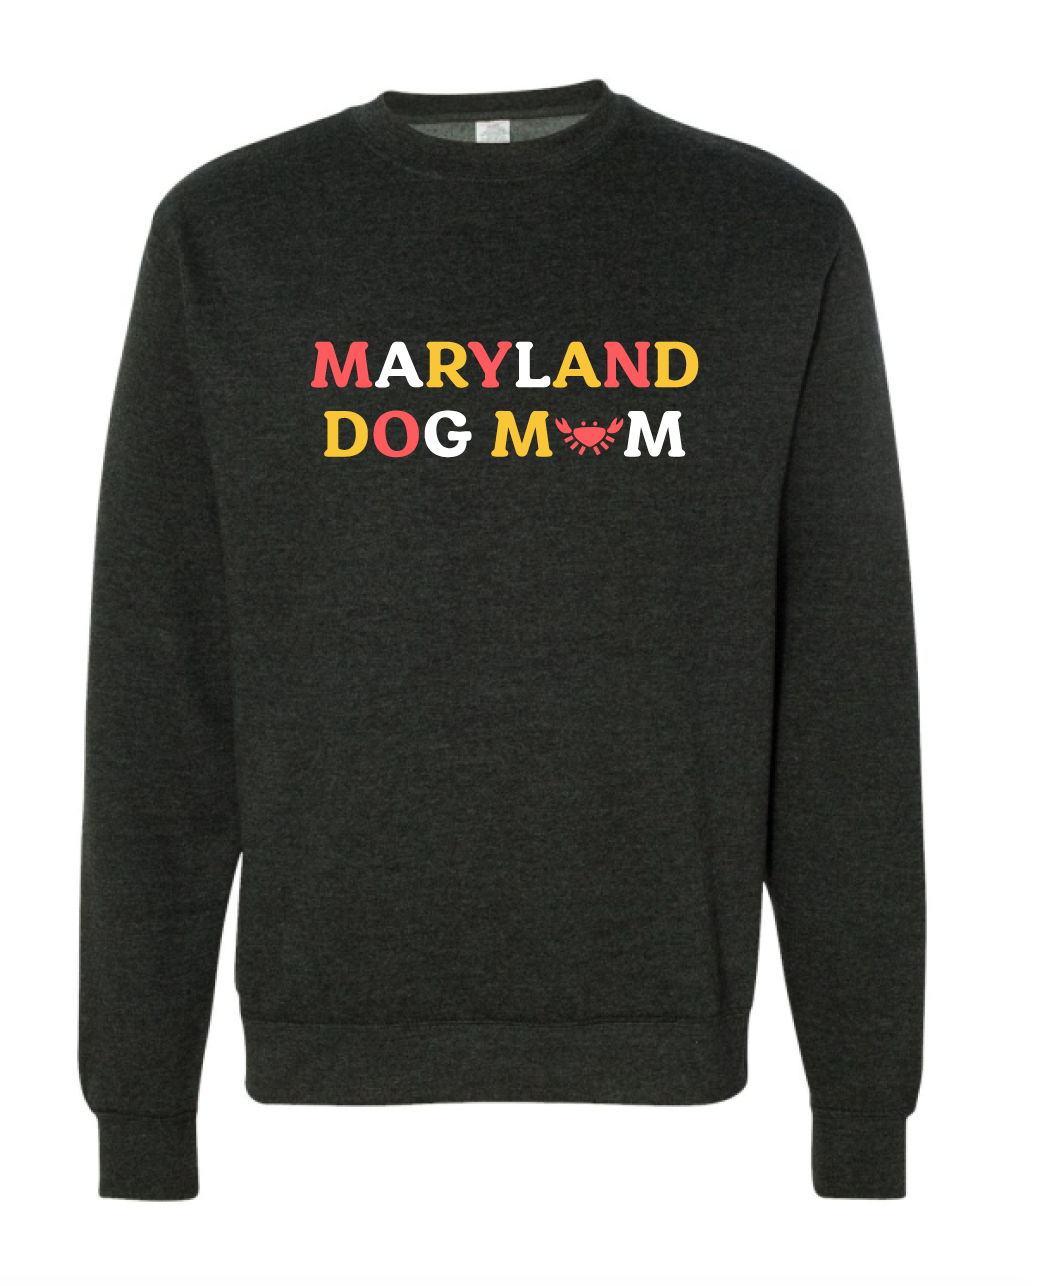 Maryland Dog Mom Crewneck Sweatshirt